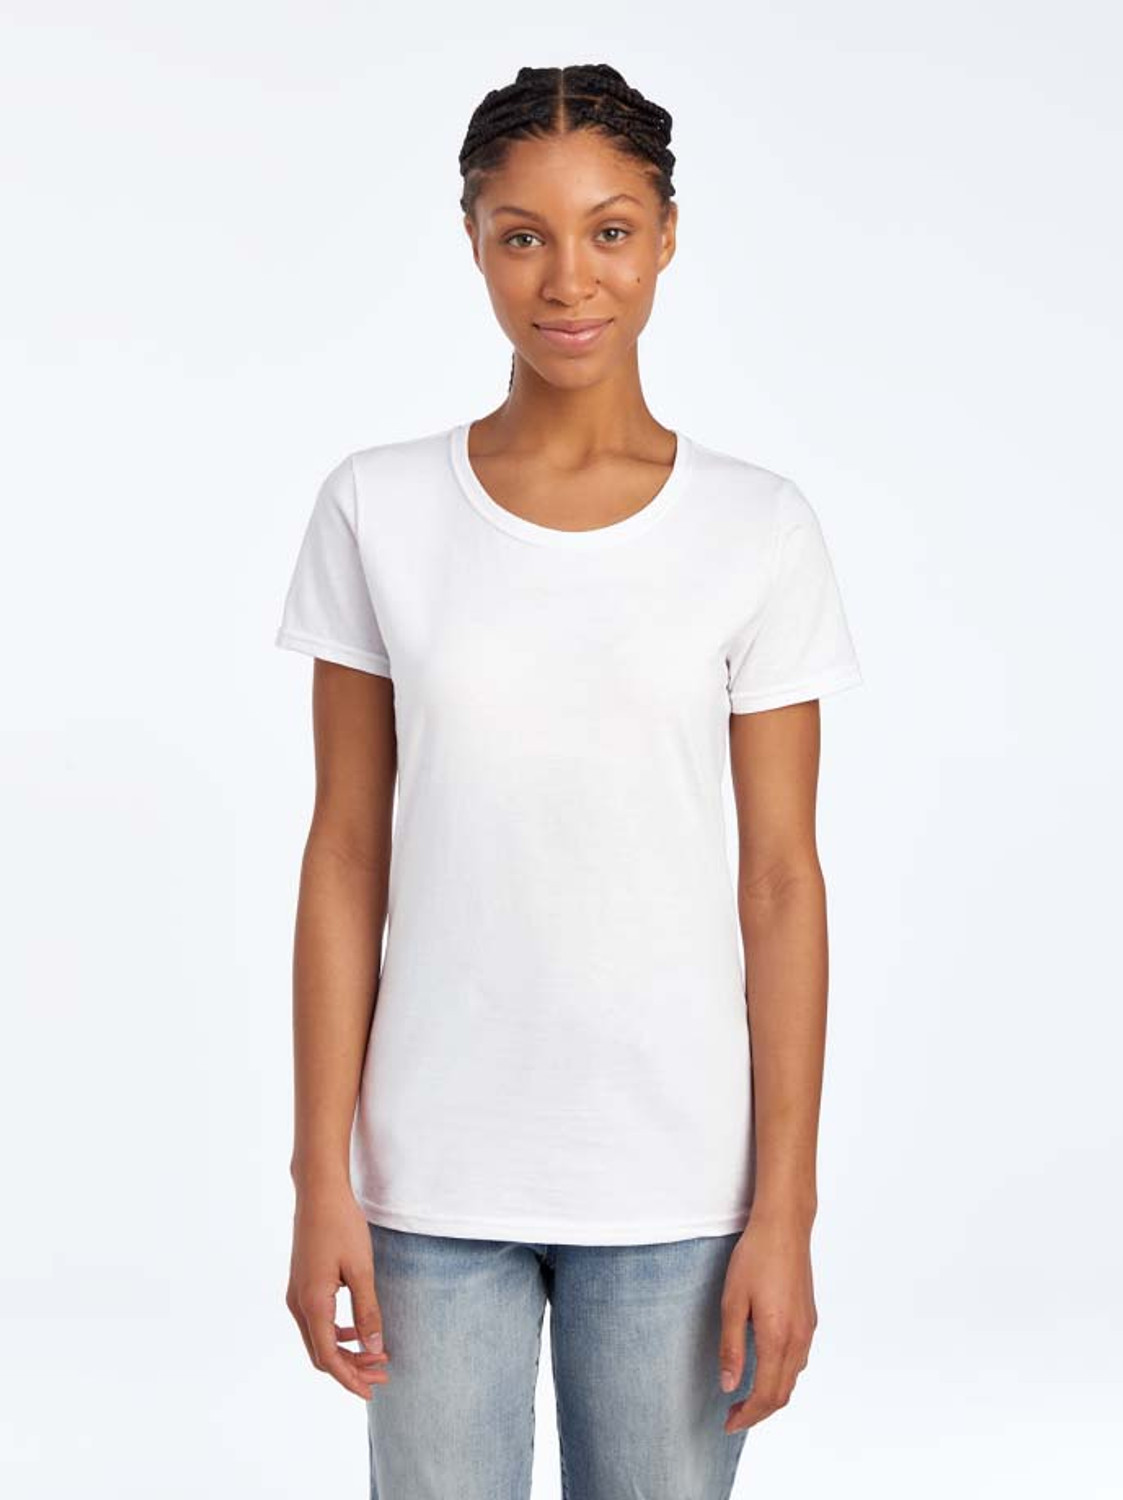 Fruit Of The Loom Full Figure T-shirt Bra, 3-pack Black/white/grey Heather  38dd : Target